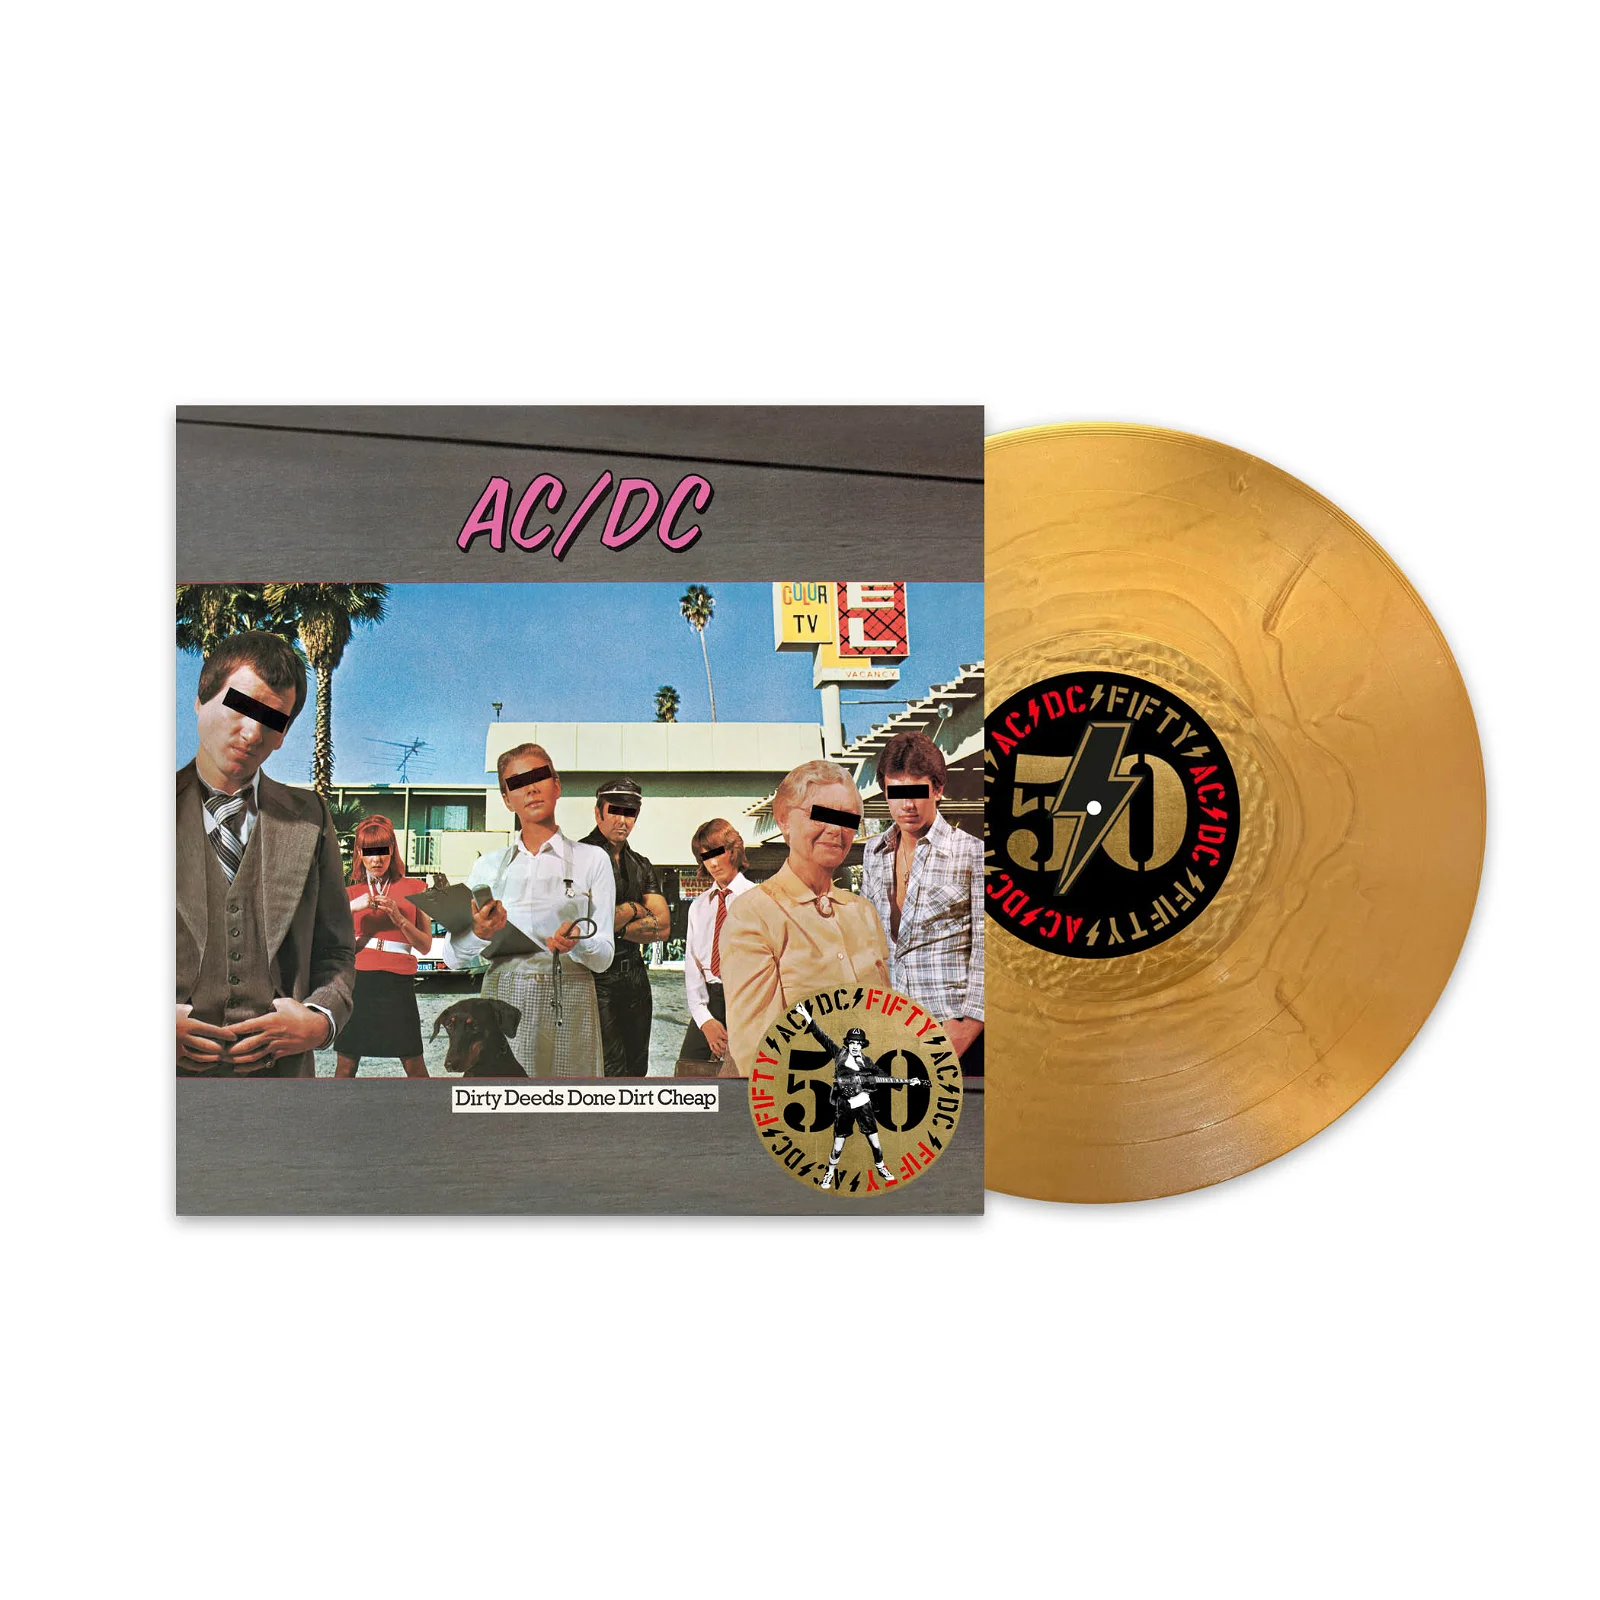 AC/DC - Dirty Deeds Done Dirt Cheap (50th Anniversary Gold Vinyl) (Dirty Deeds Done Dirt Cheap (50th Anniversary Gold Vinyl))